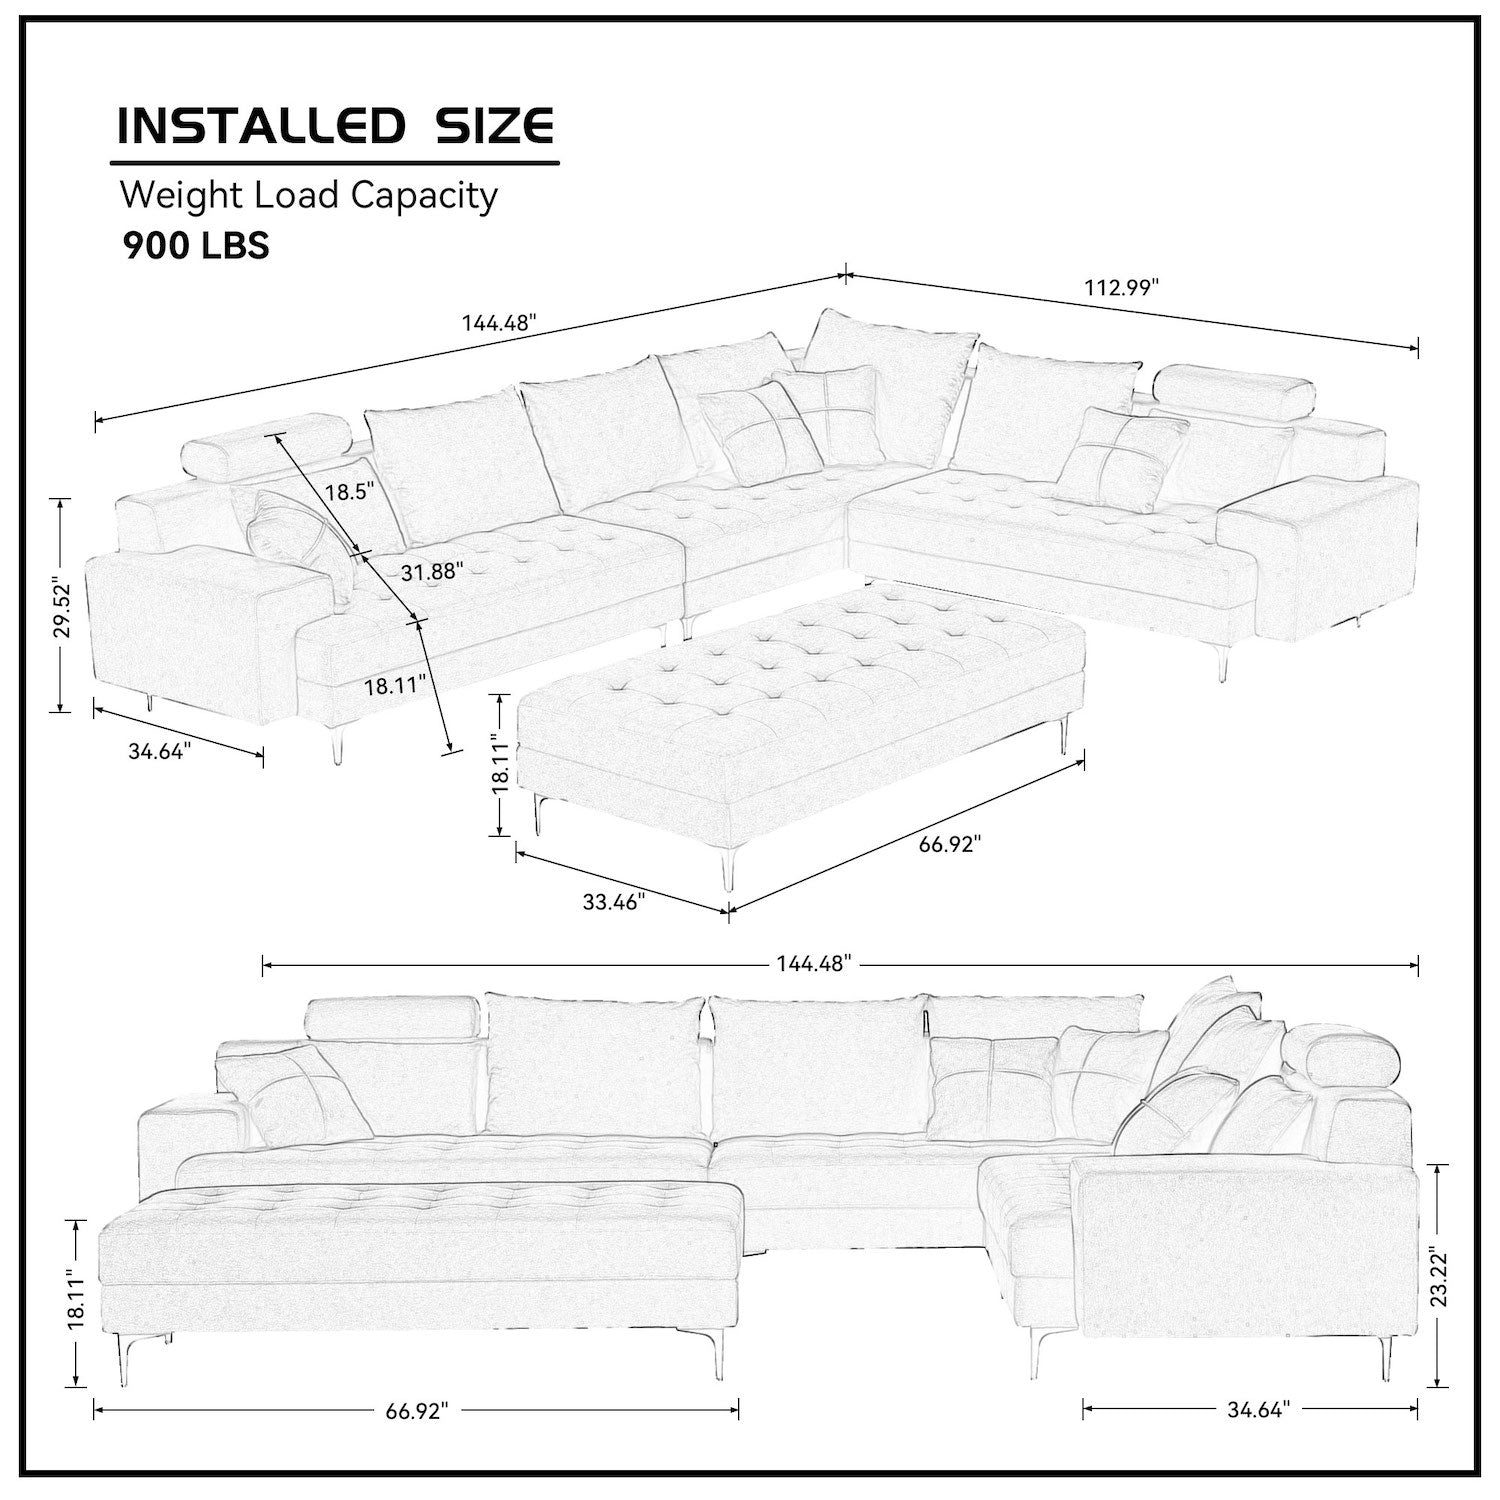 Justone Interior 144" Modern Reversible Sectional Sofa in Dark Gray Linen